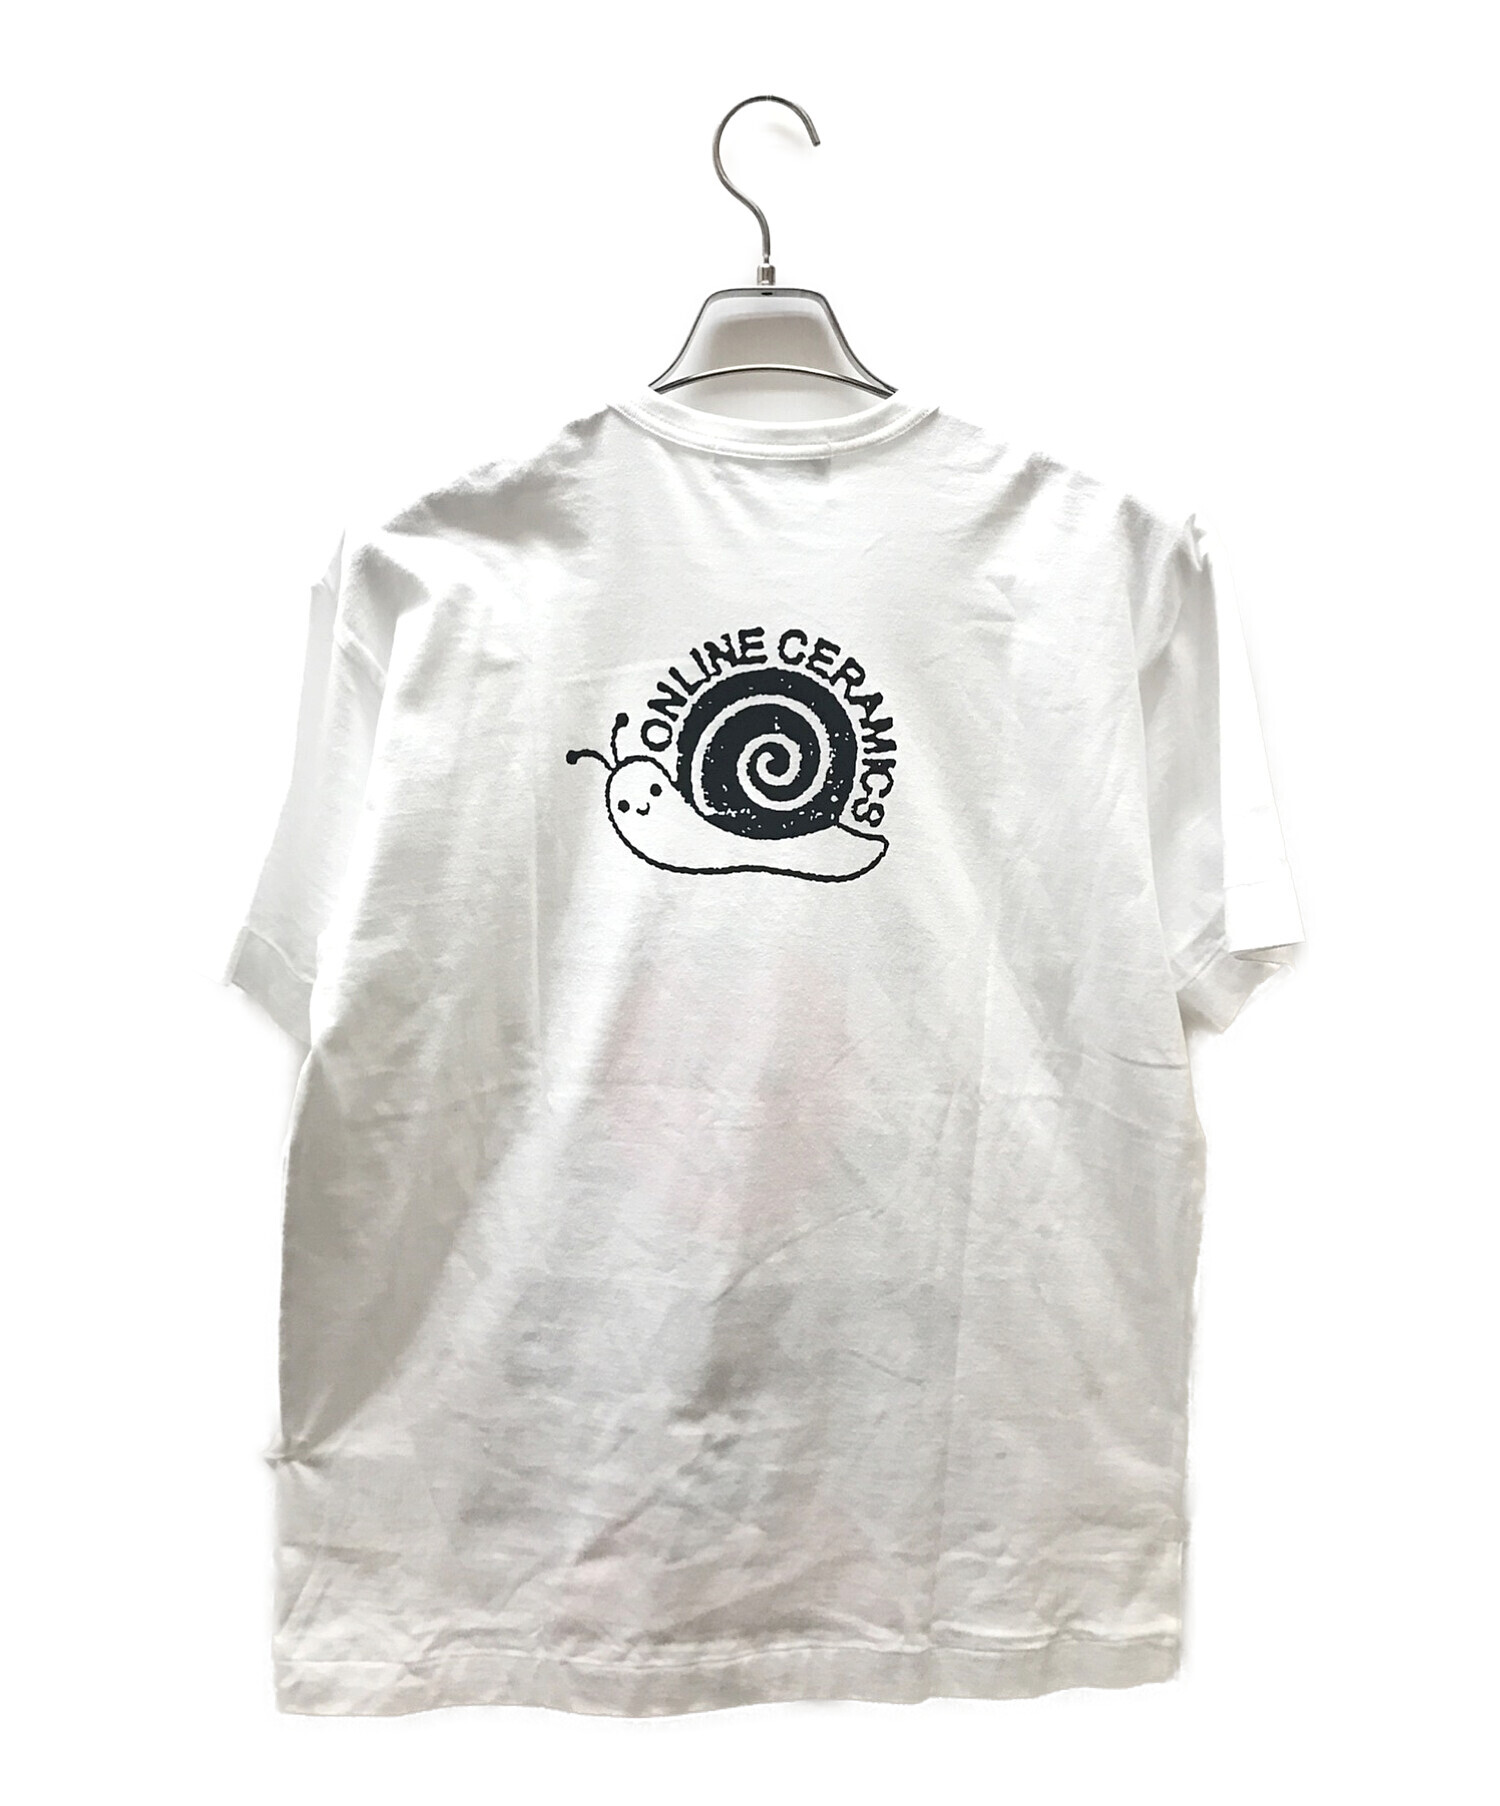 CDG (コムデギャルソン) オンラインセラミックス ロゴ Tシャツ ホワイト サイズ:XL